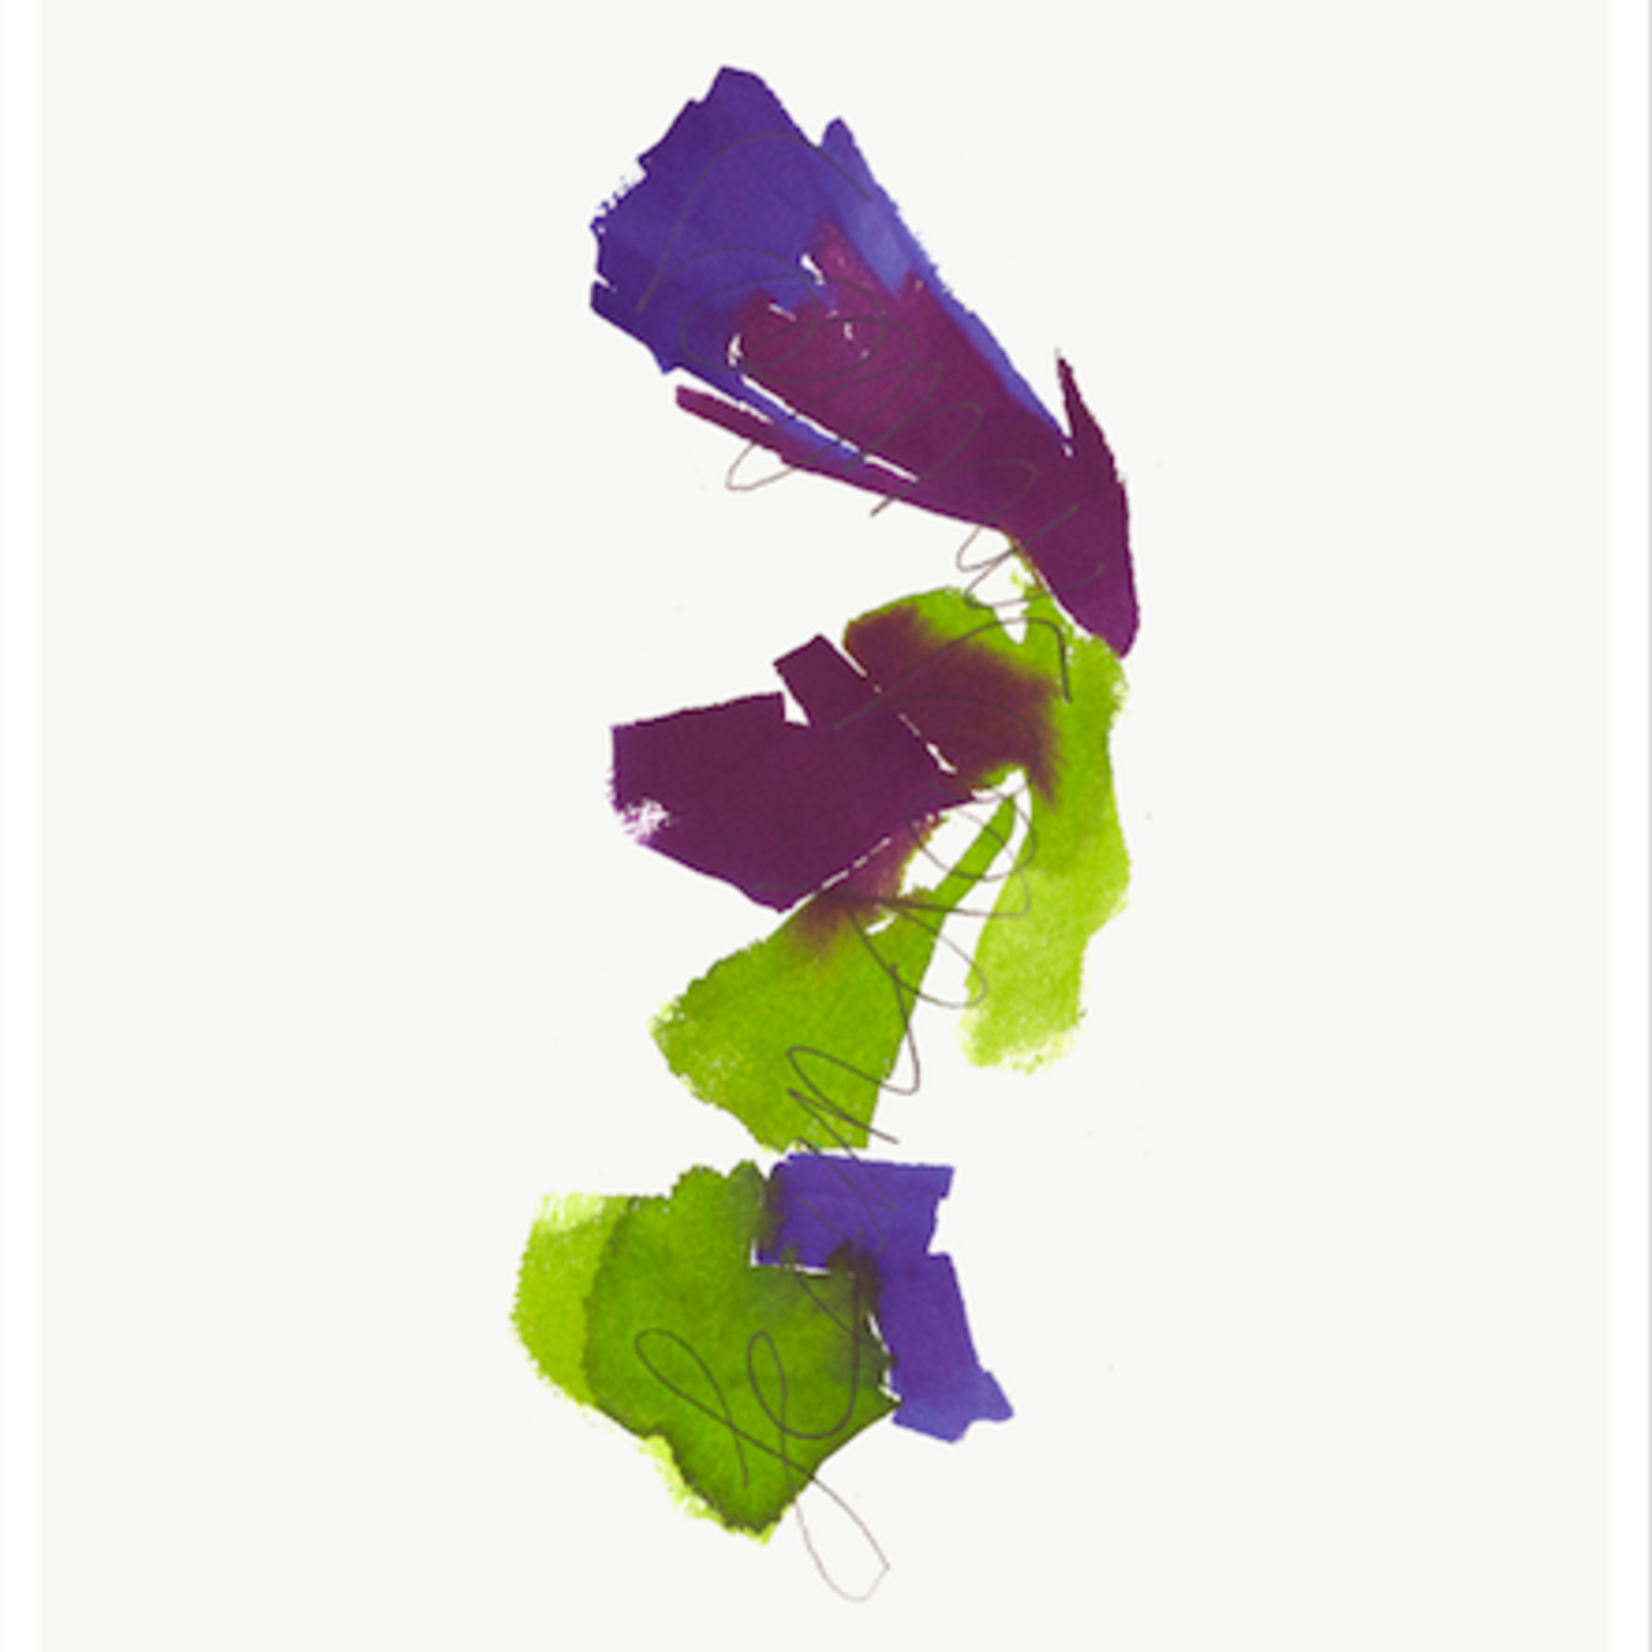 Framed Print on Rag Paper: Color Study 18 By Encarnacion Portal Rubio